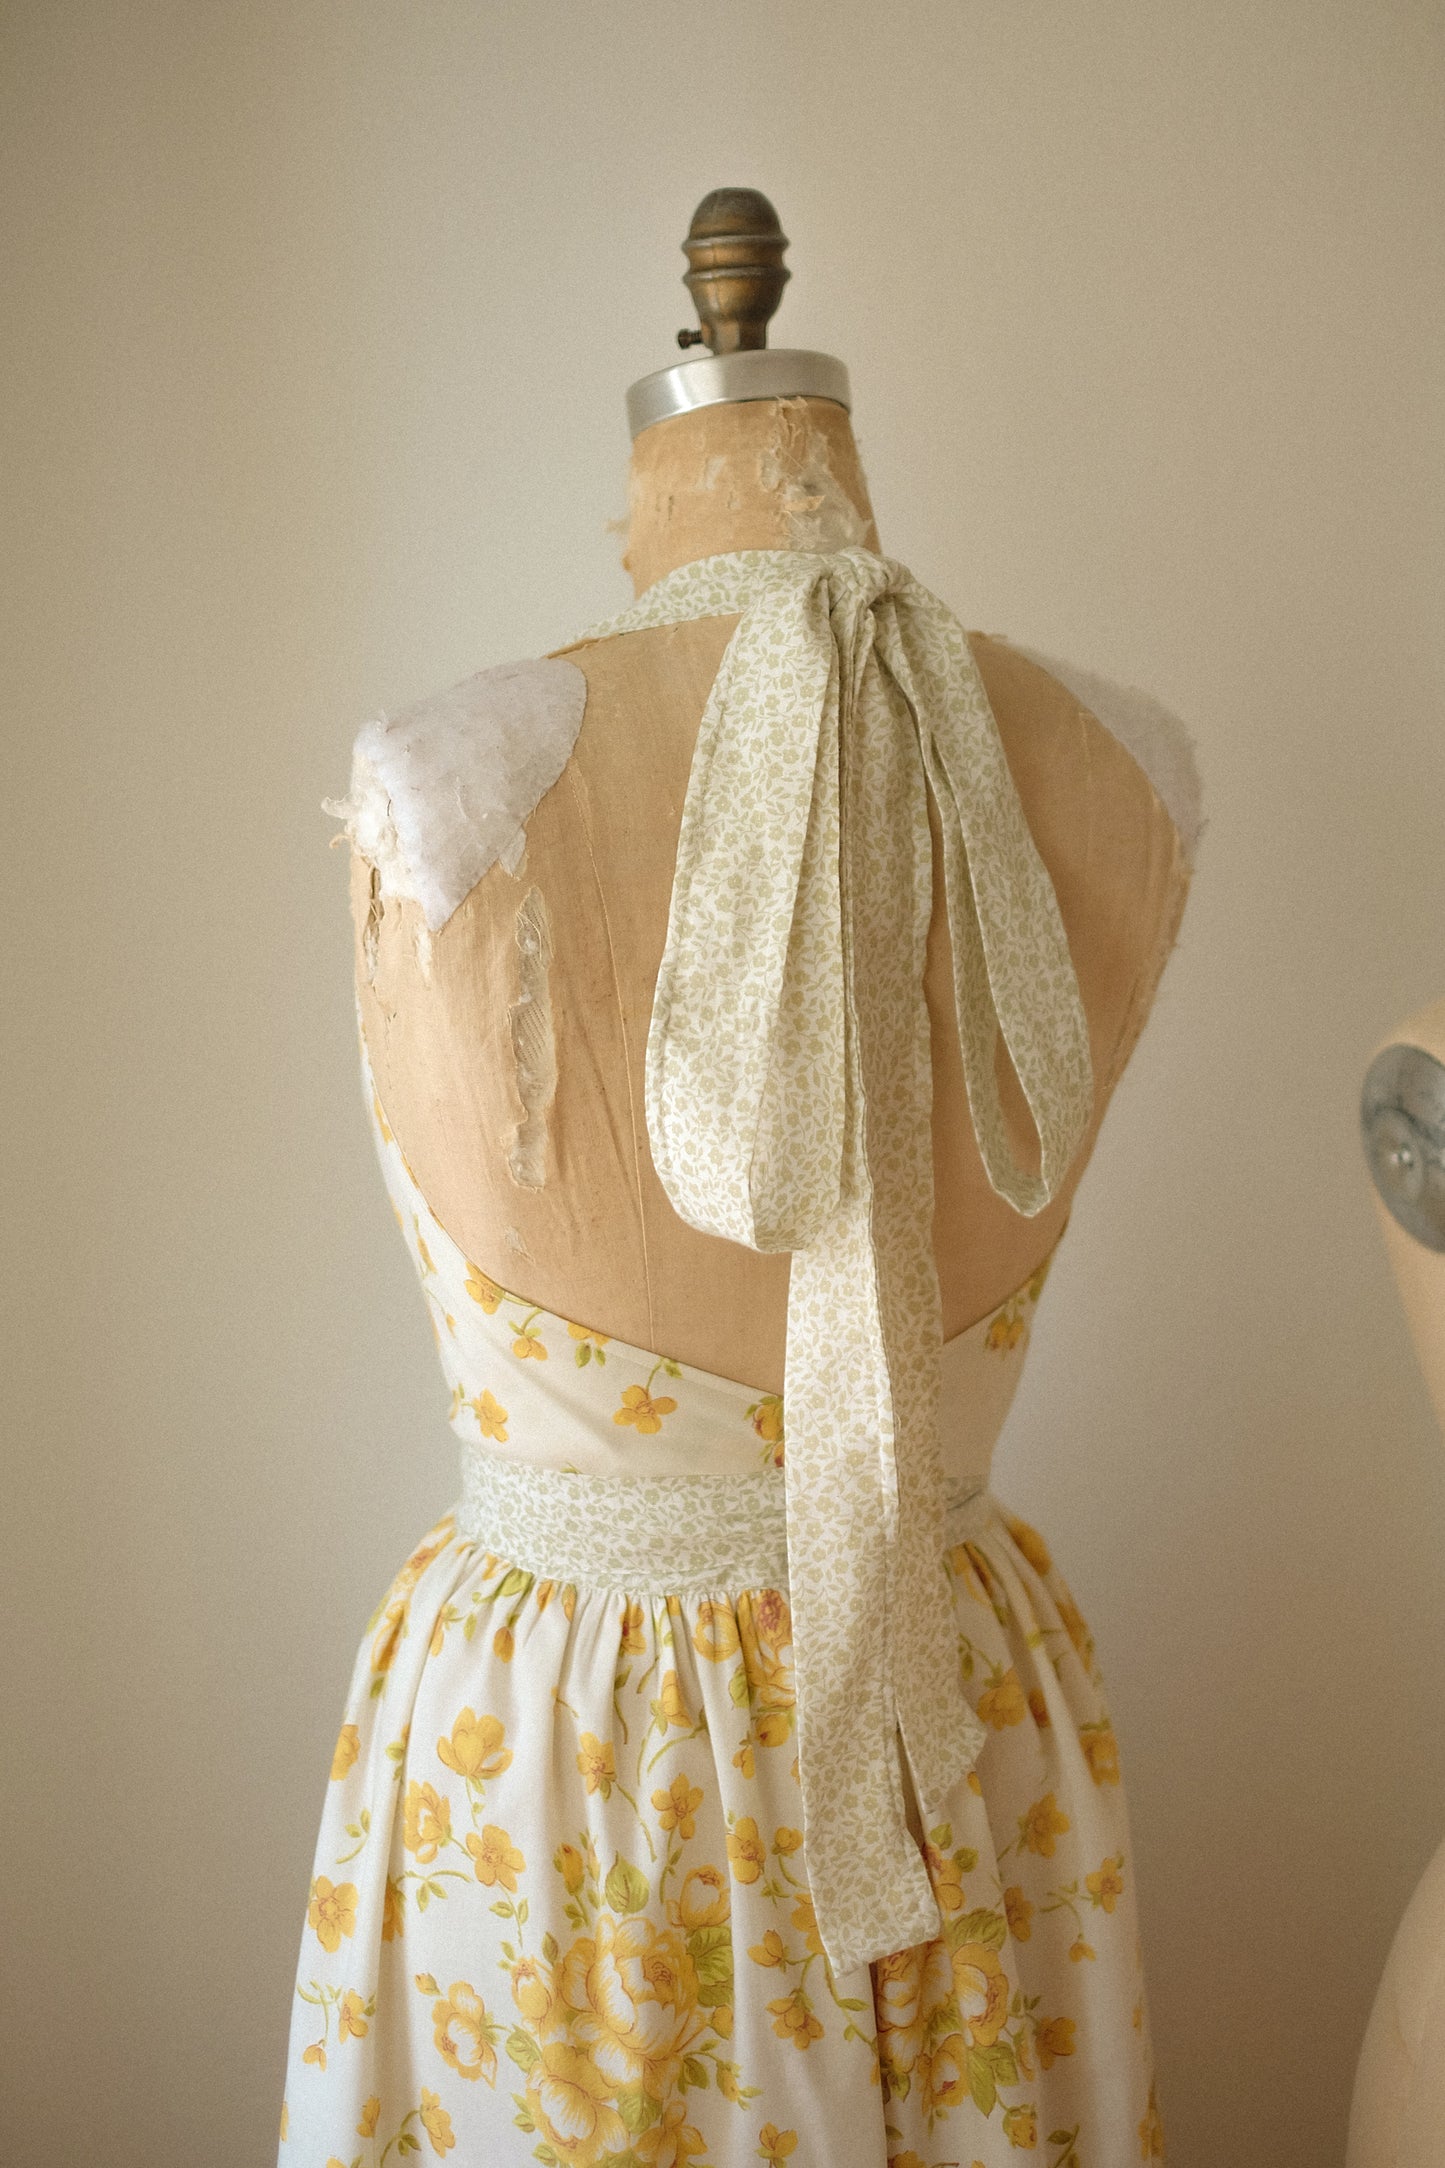 Handmade vintage floral apron - Honey ♡